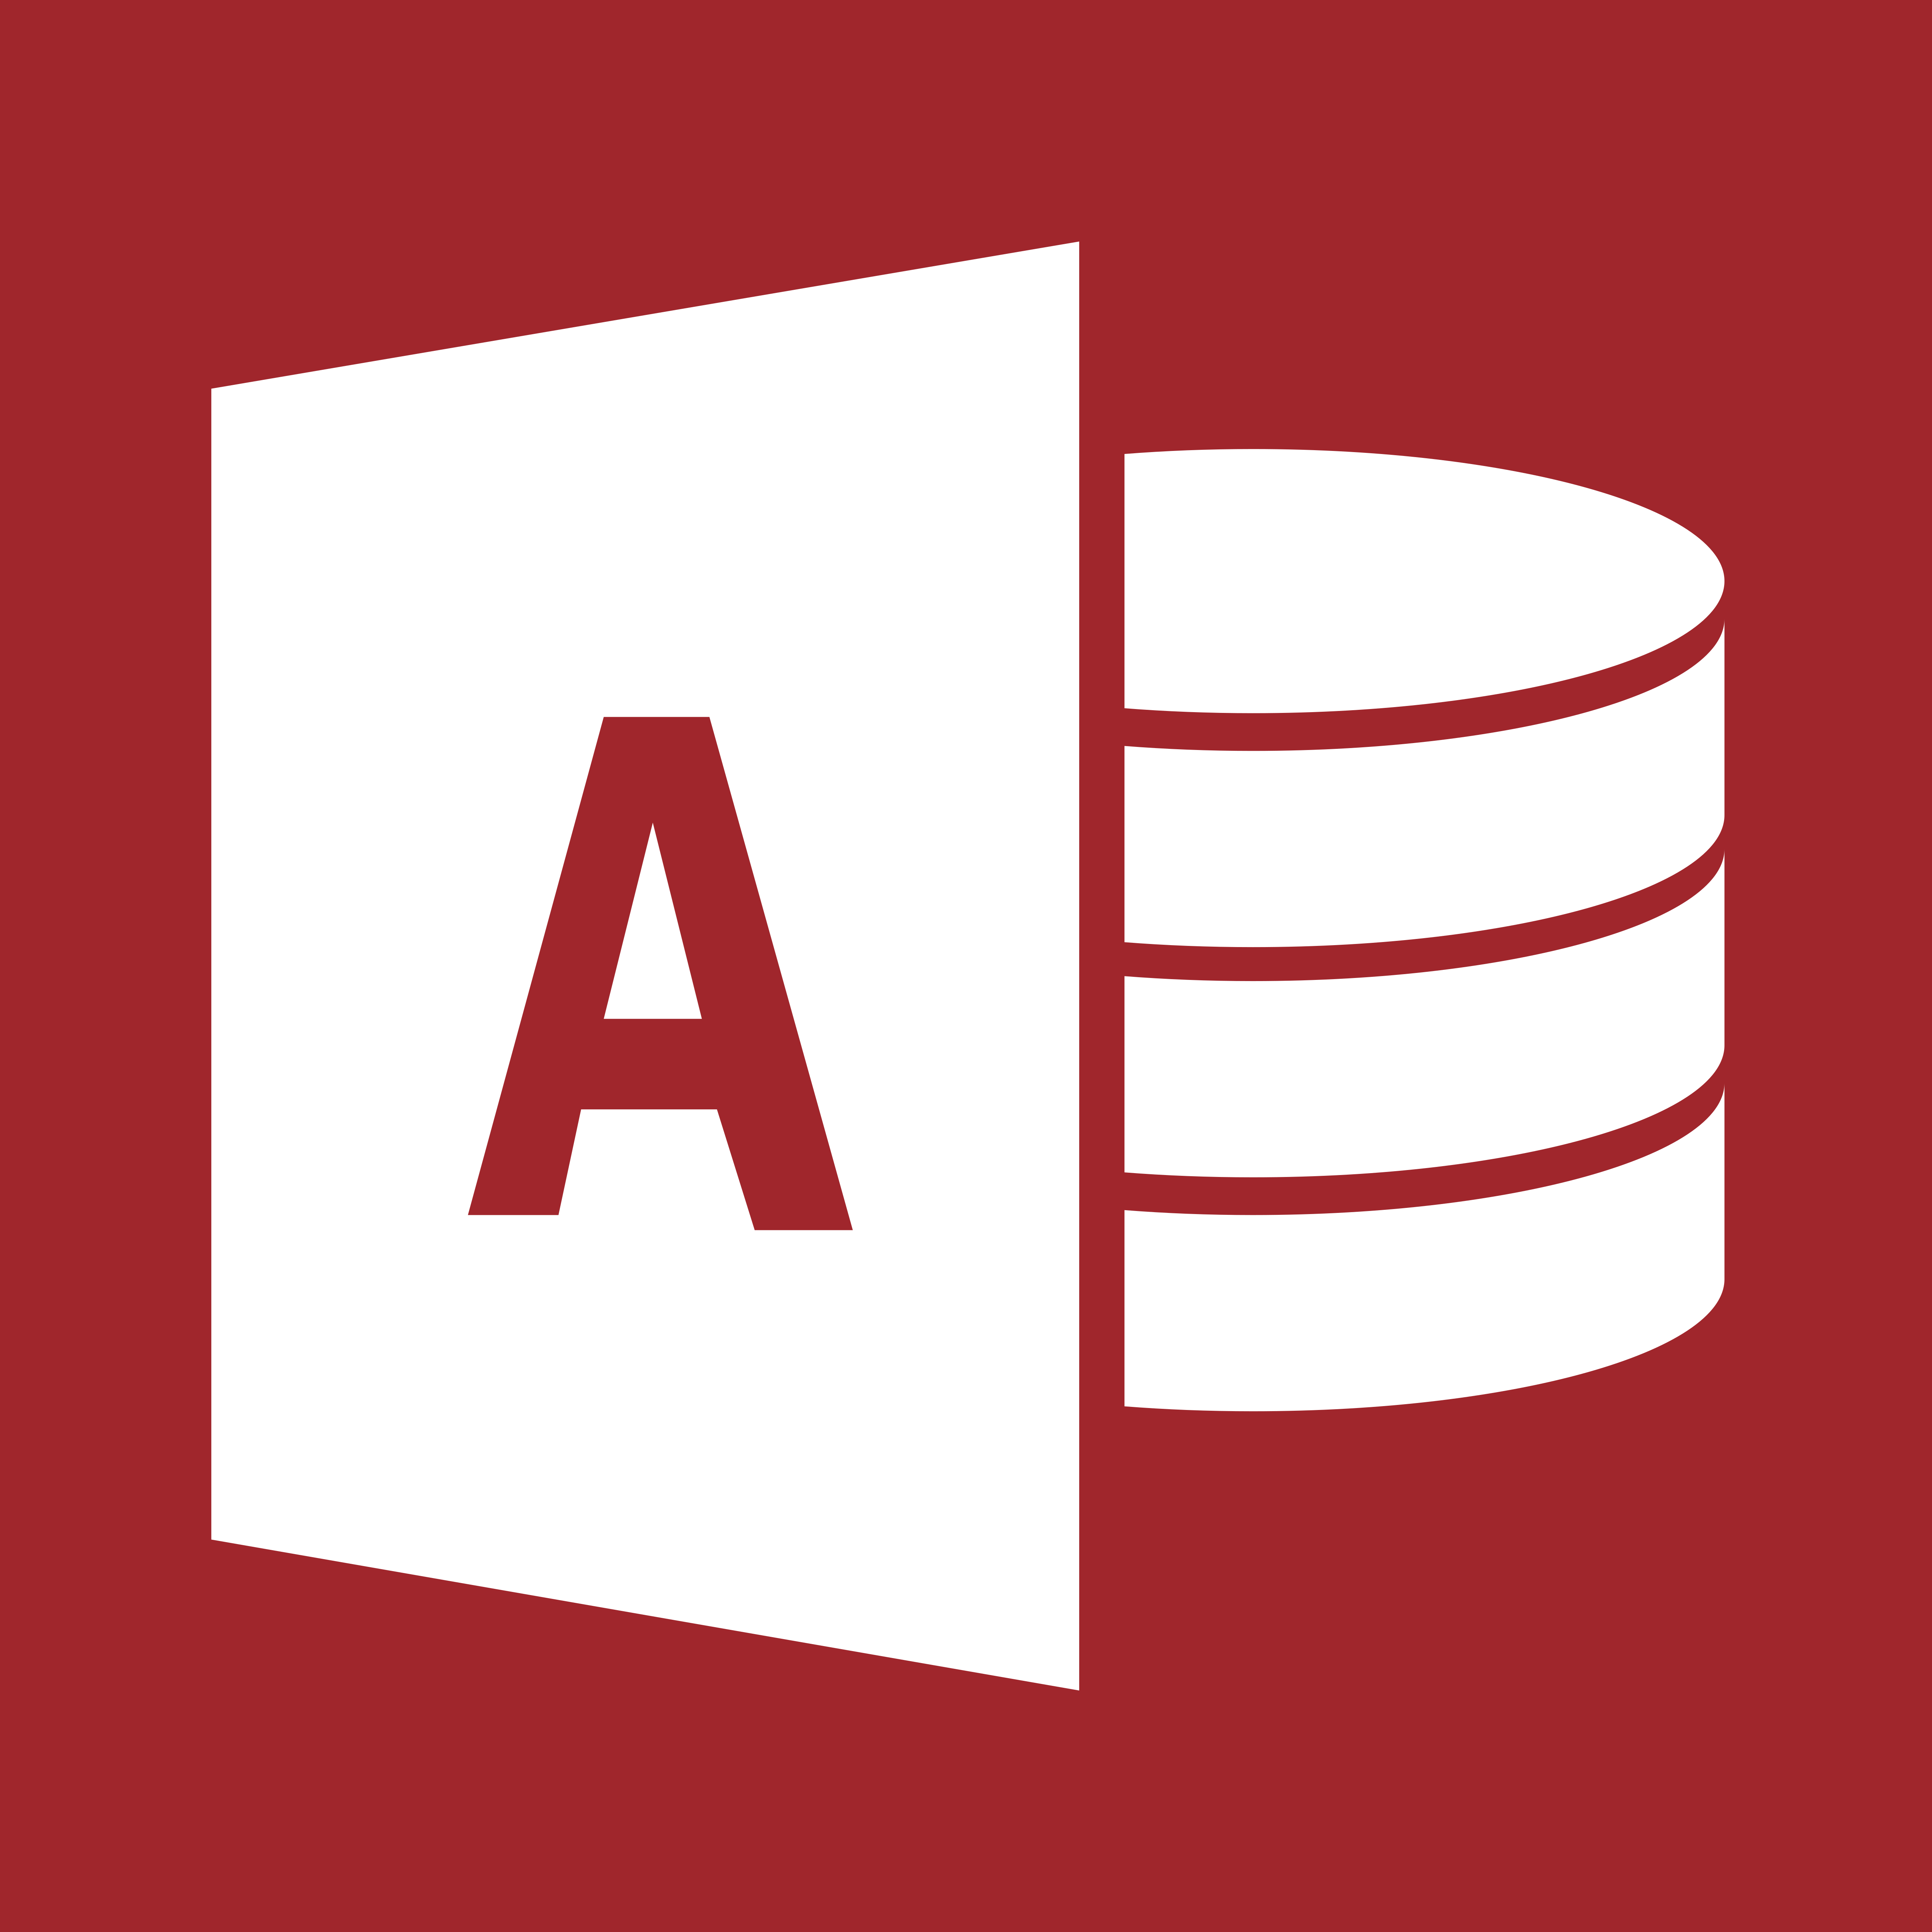 База данных access логотип. Иконка MS access. Microsoft access значок. СУБД Microsoft access 2016. Access слово